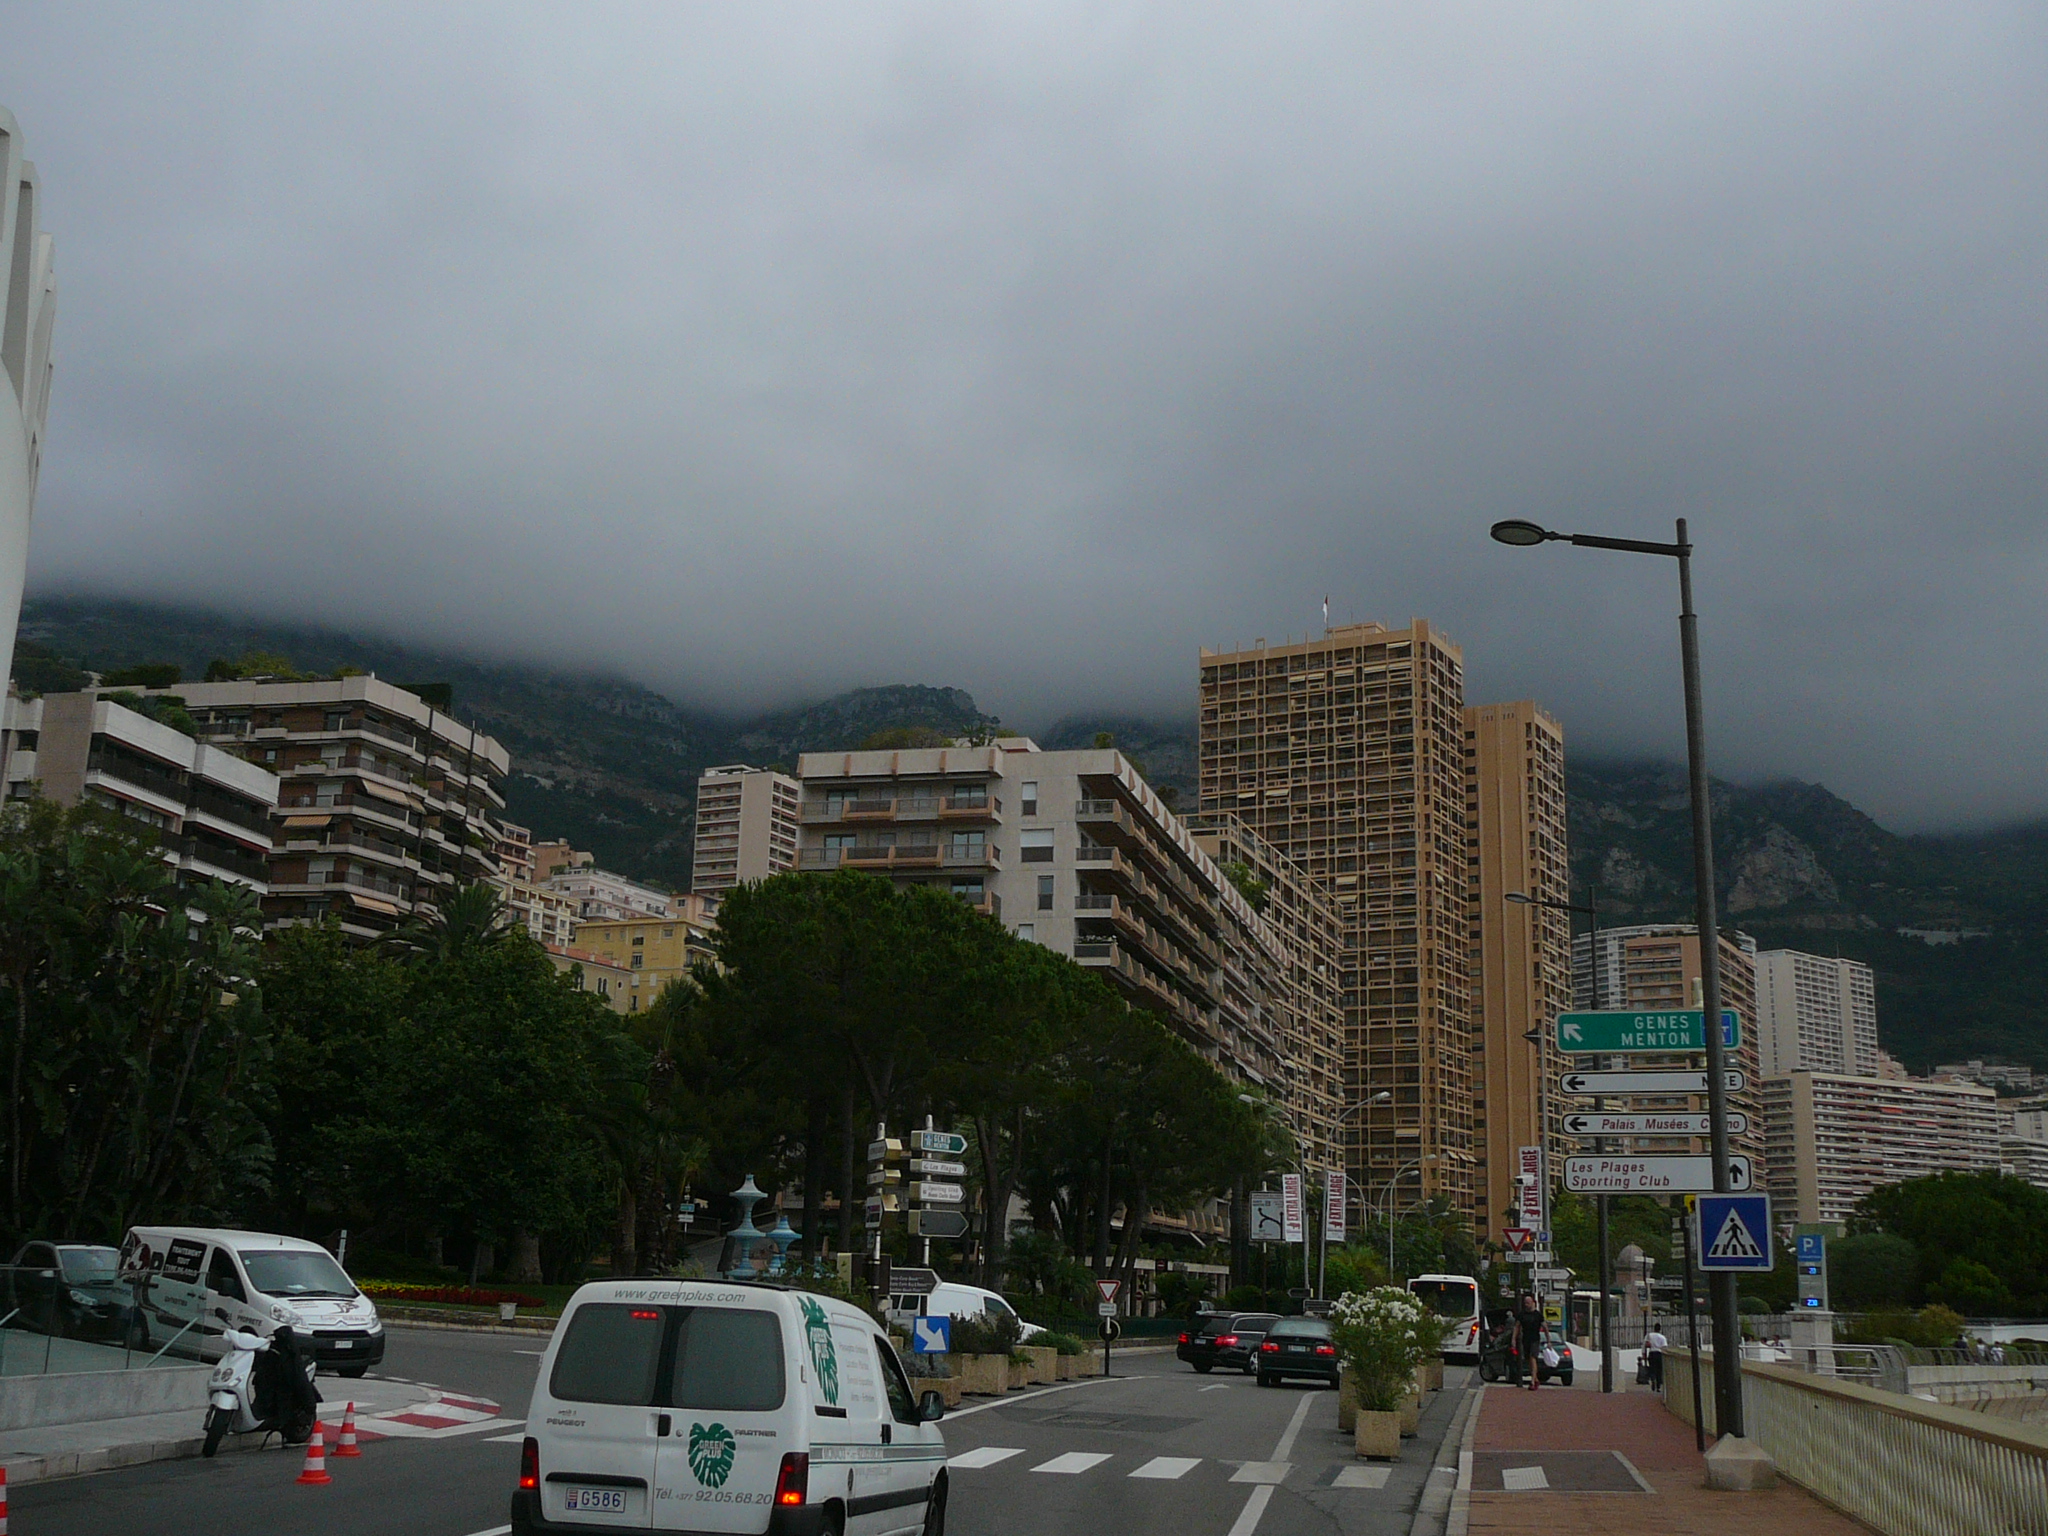 Monaco felhőbe vesző hegyei.jpg